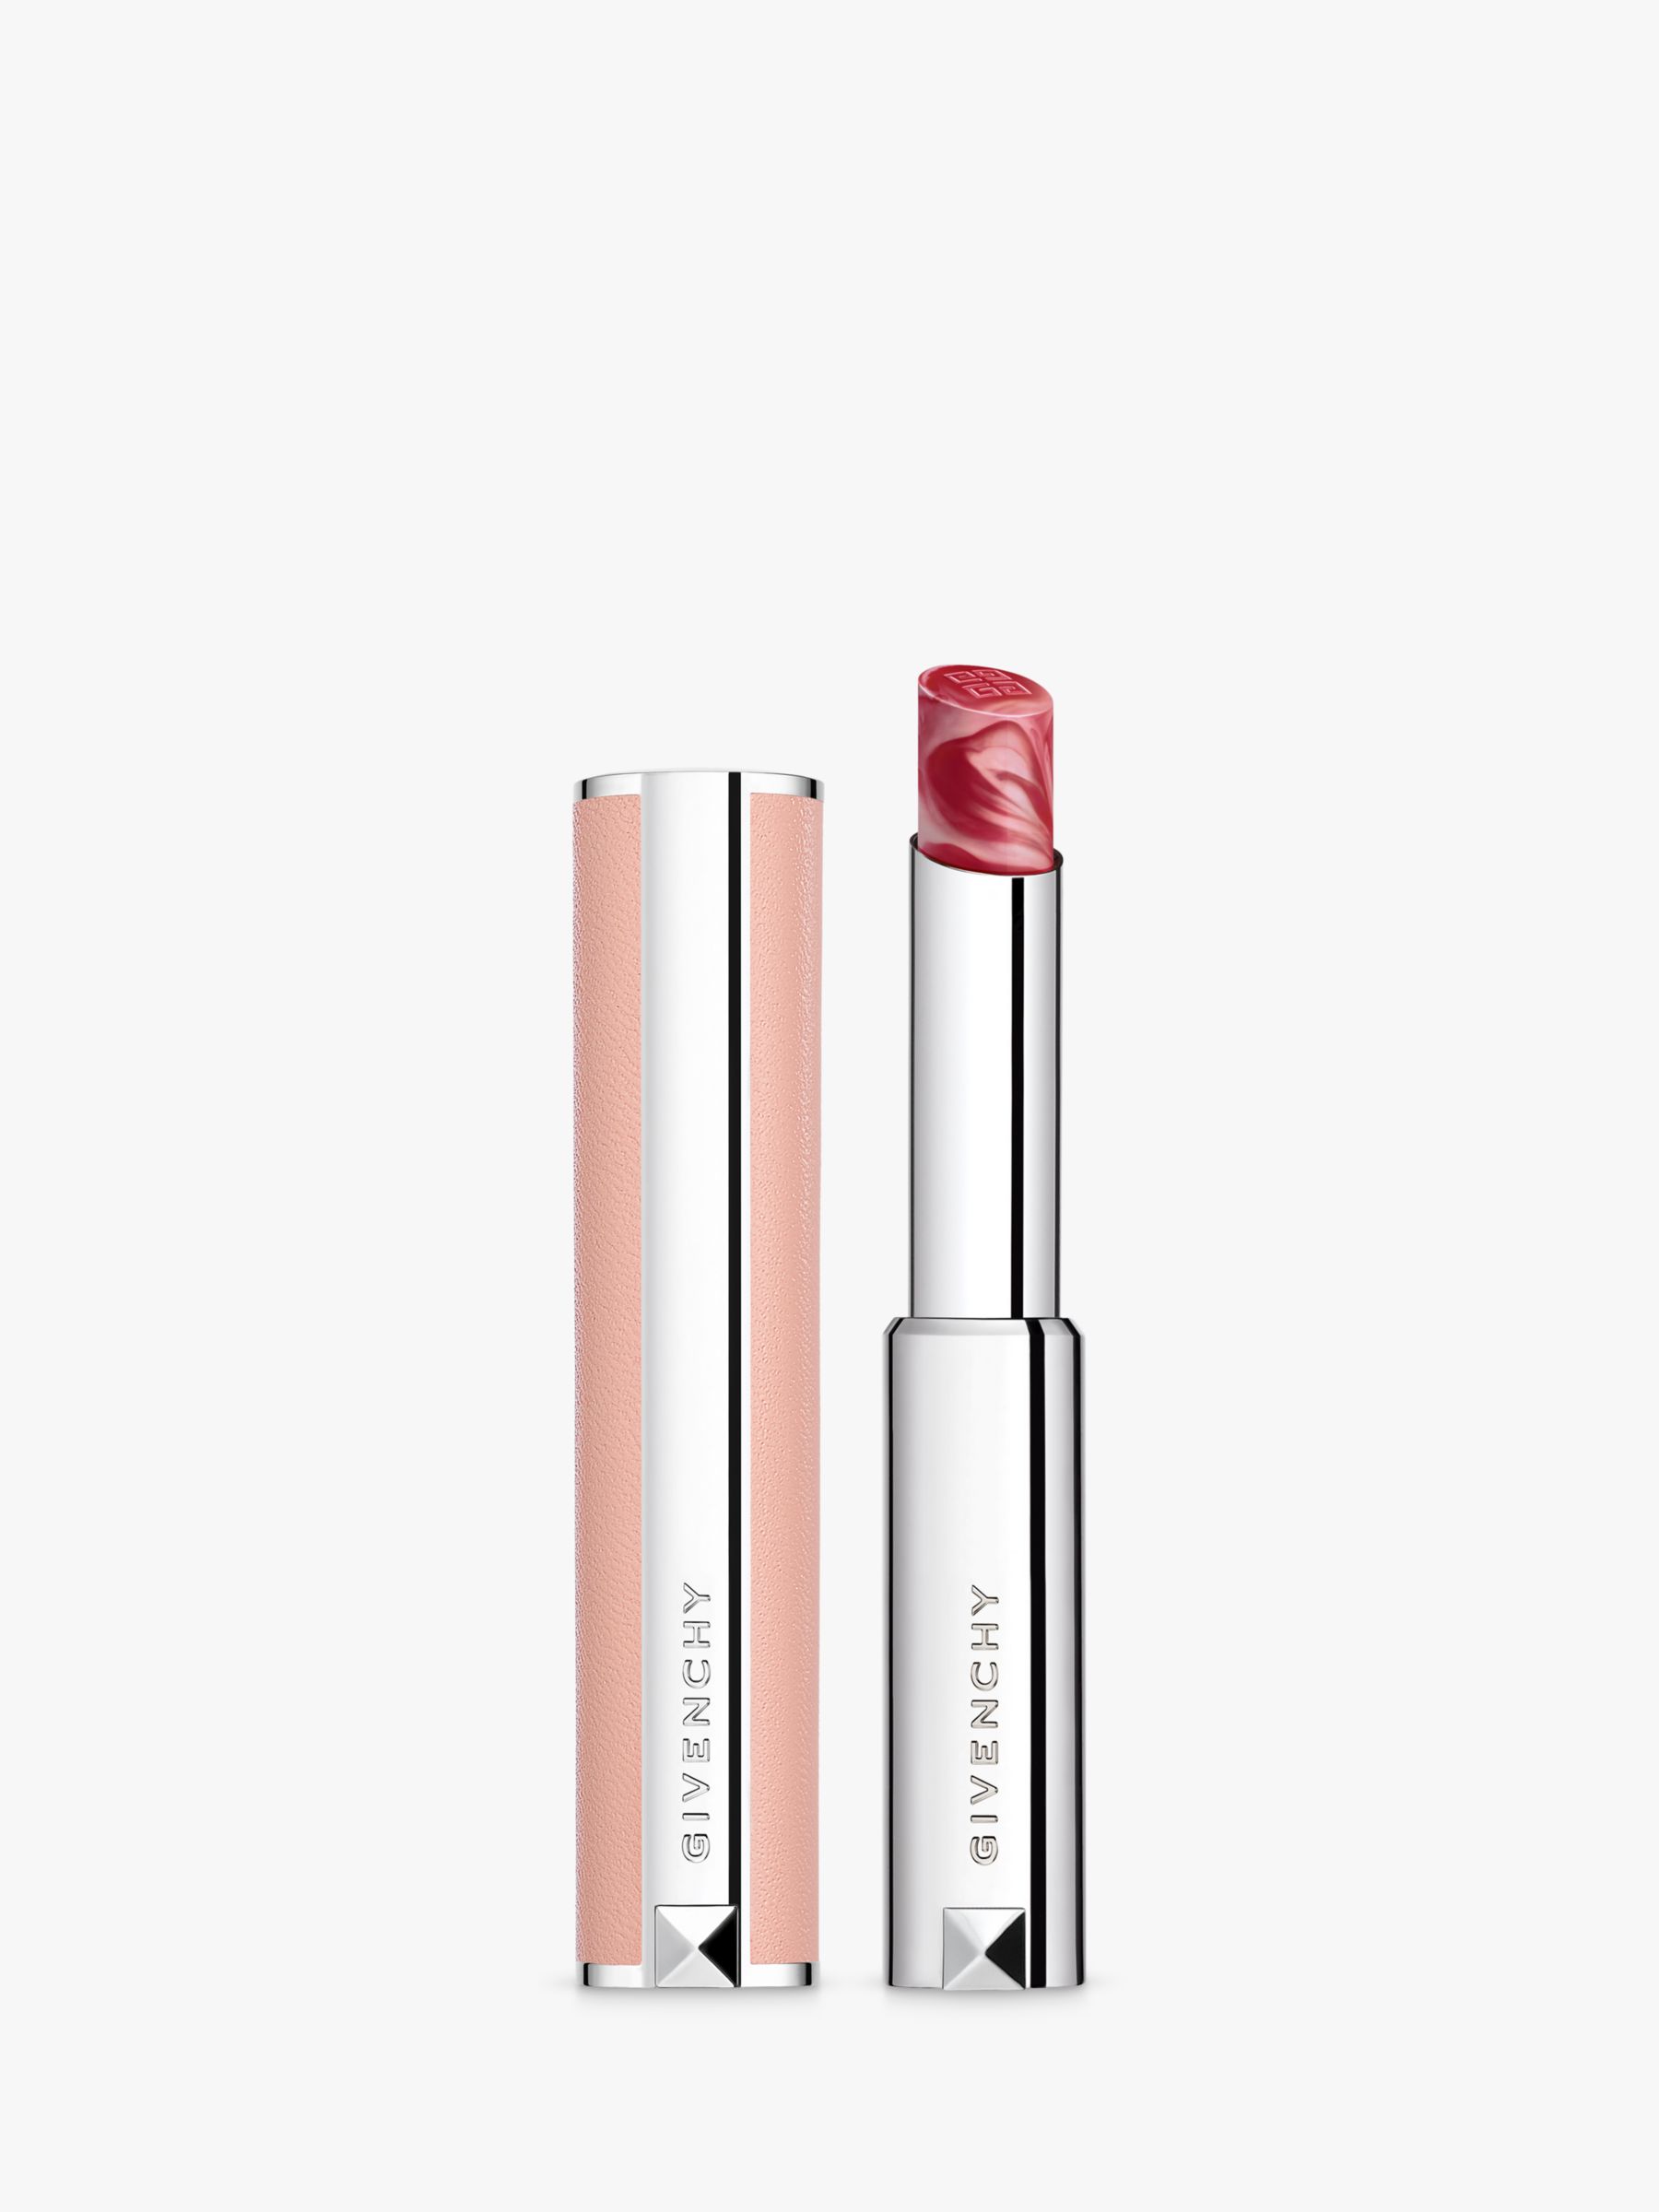 Givenchy Rose Perfecto Beautifying Lip Balm, N333 L'Interdit 1